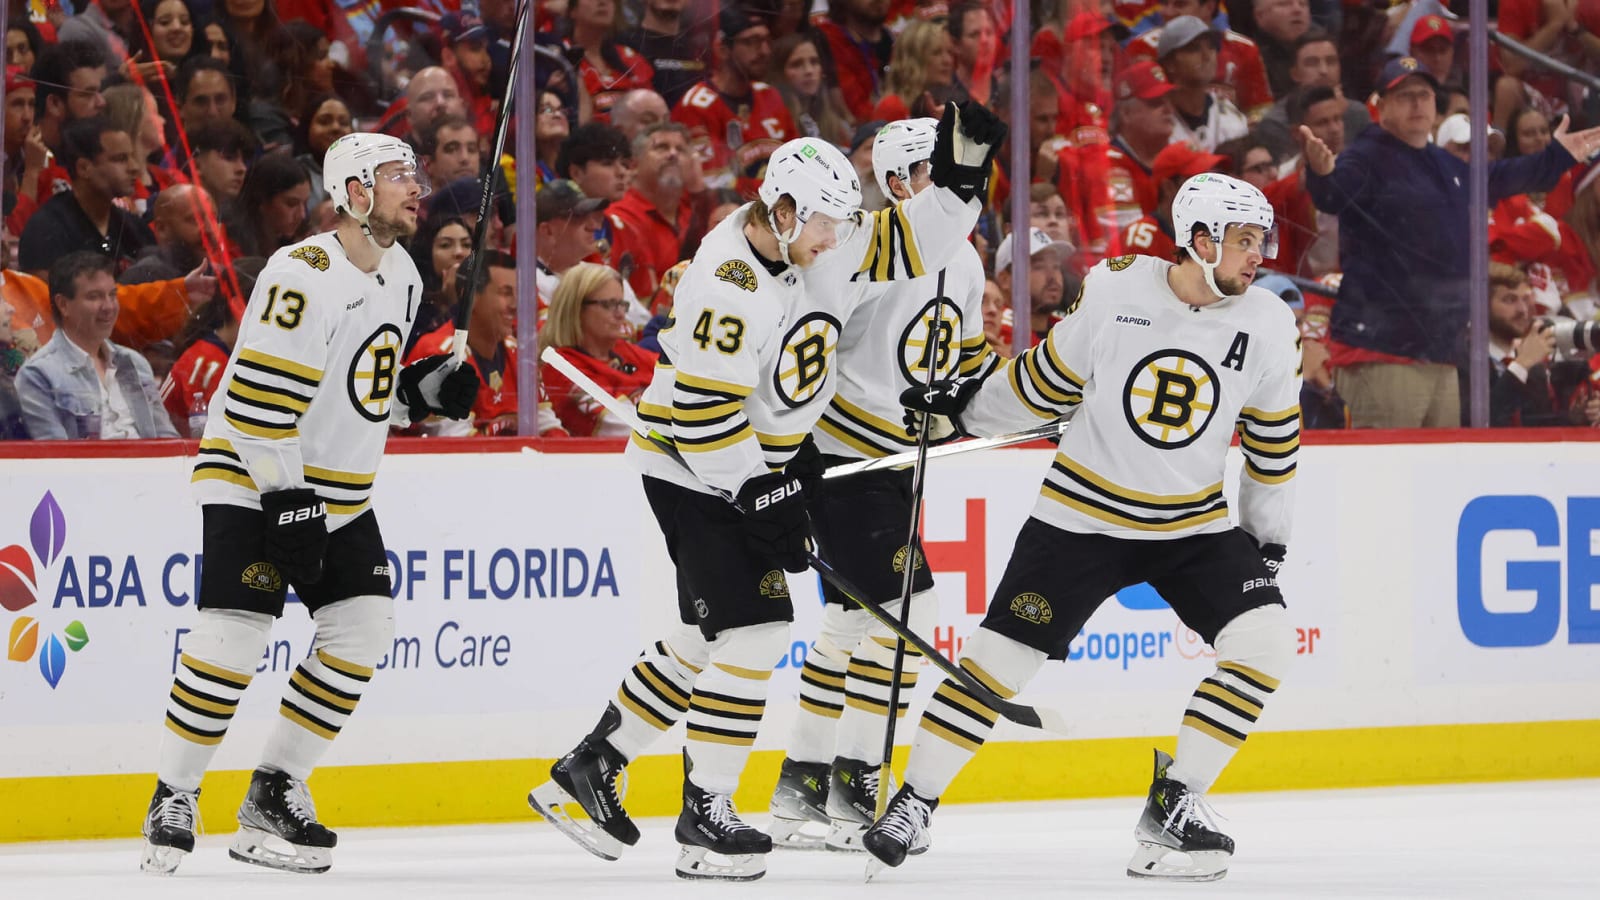 Three takeaways as Bruins force Game 6 to keep season alive